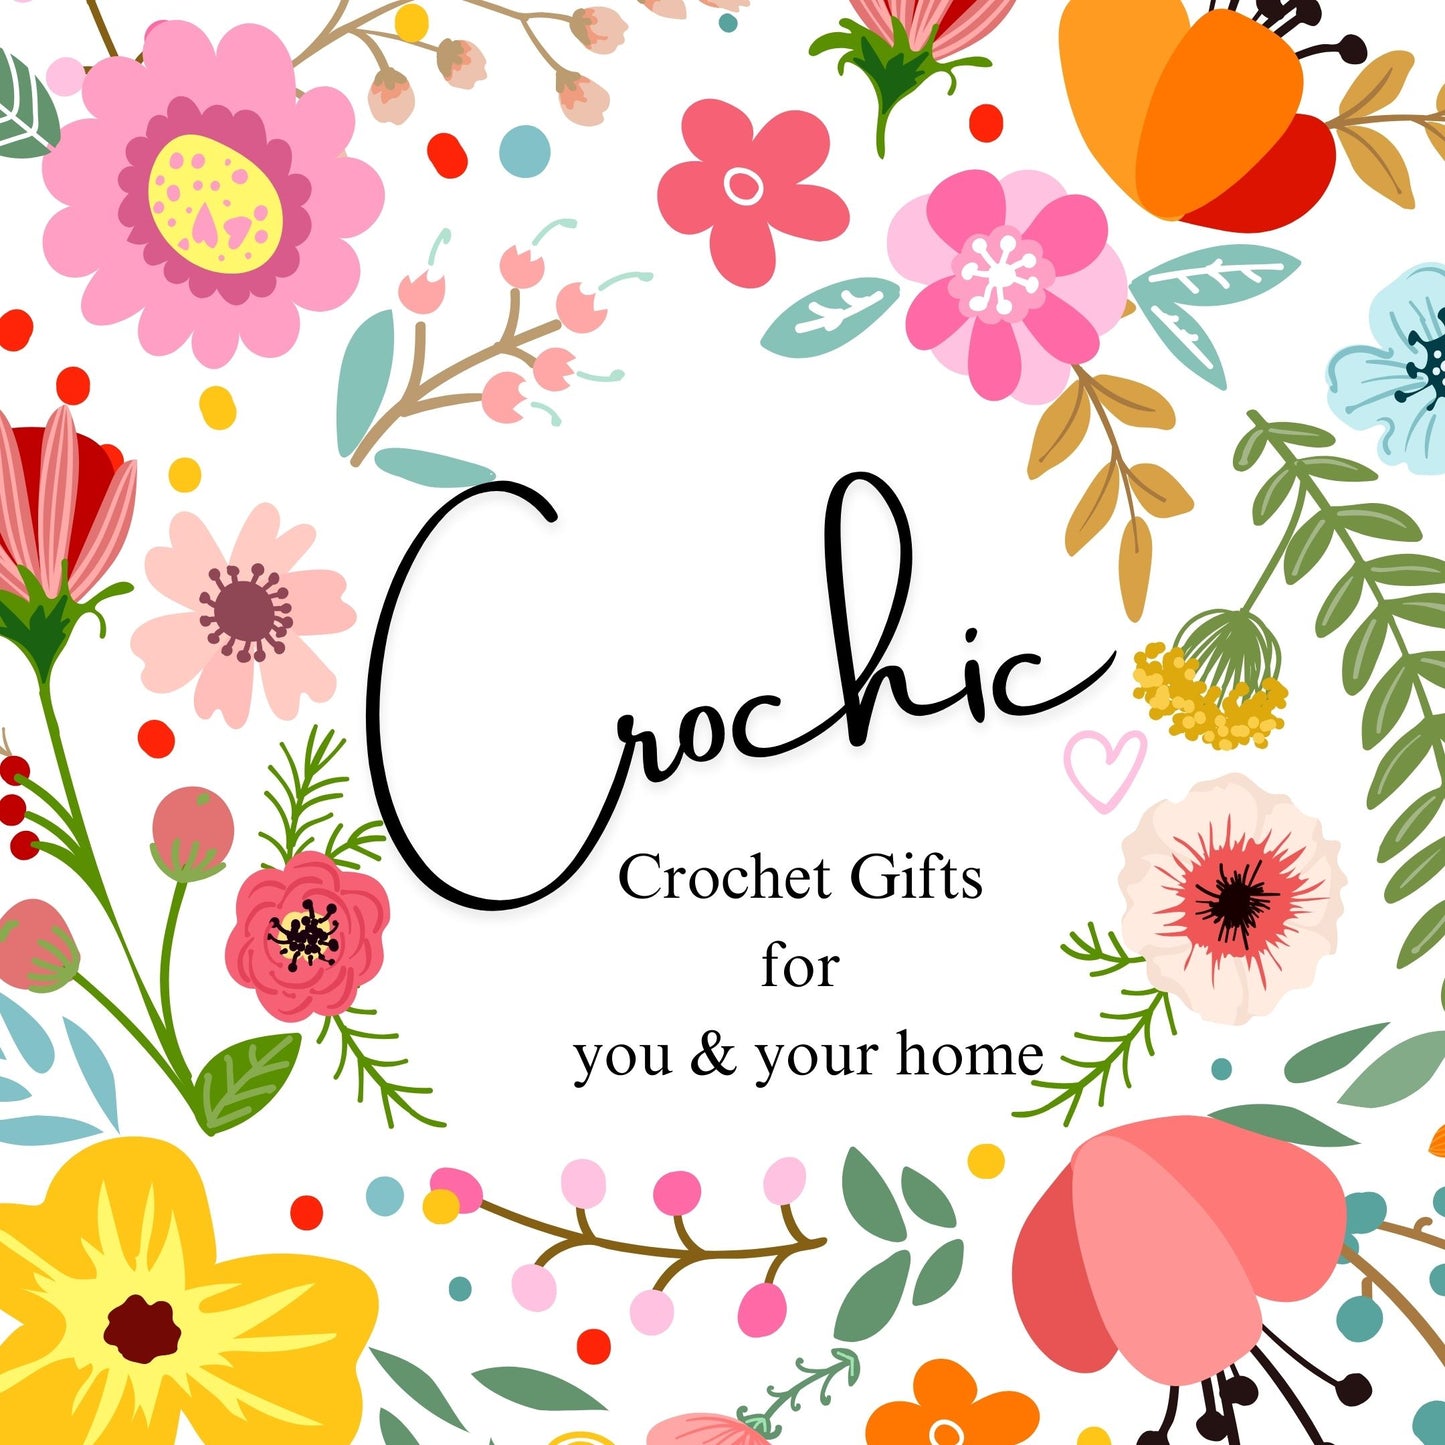 crochic crochet gifts